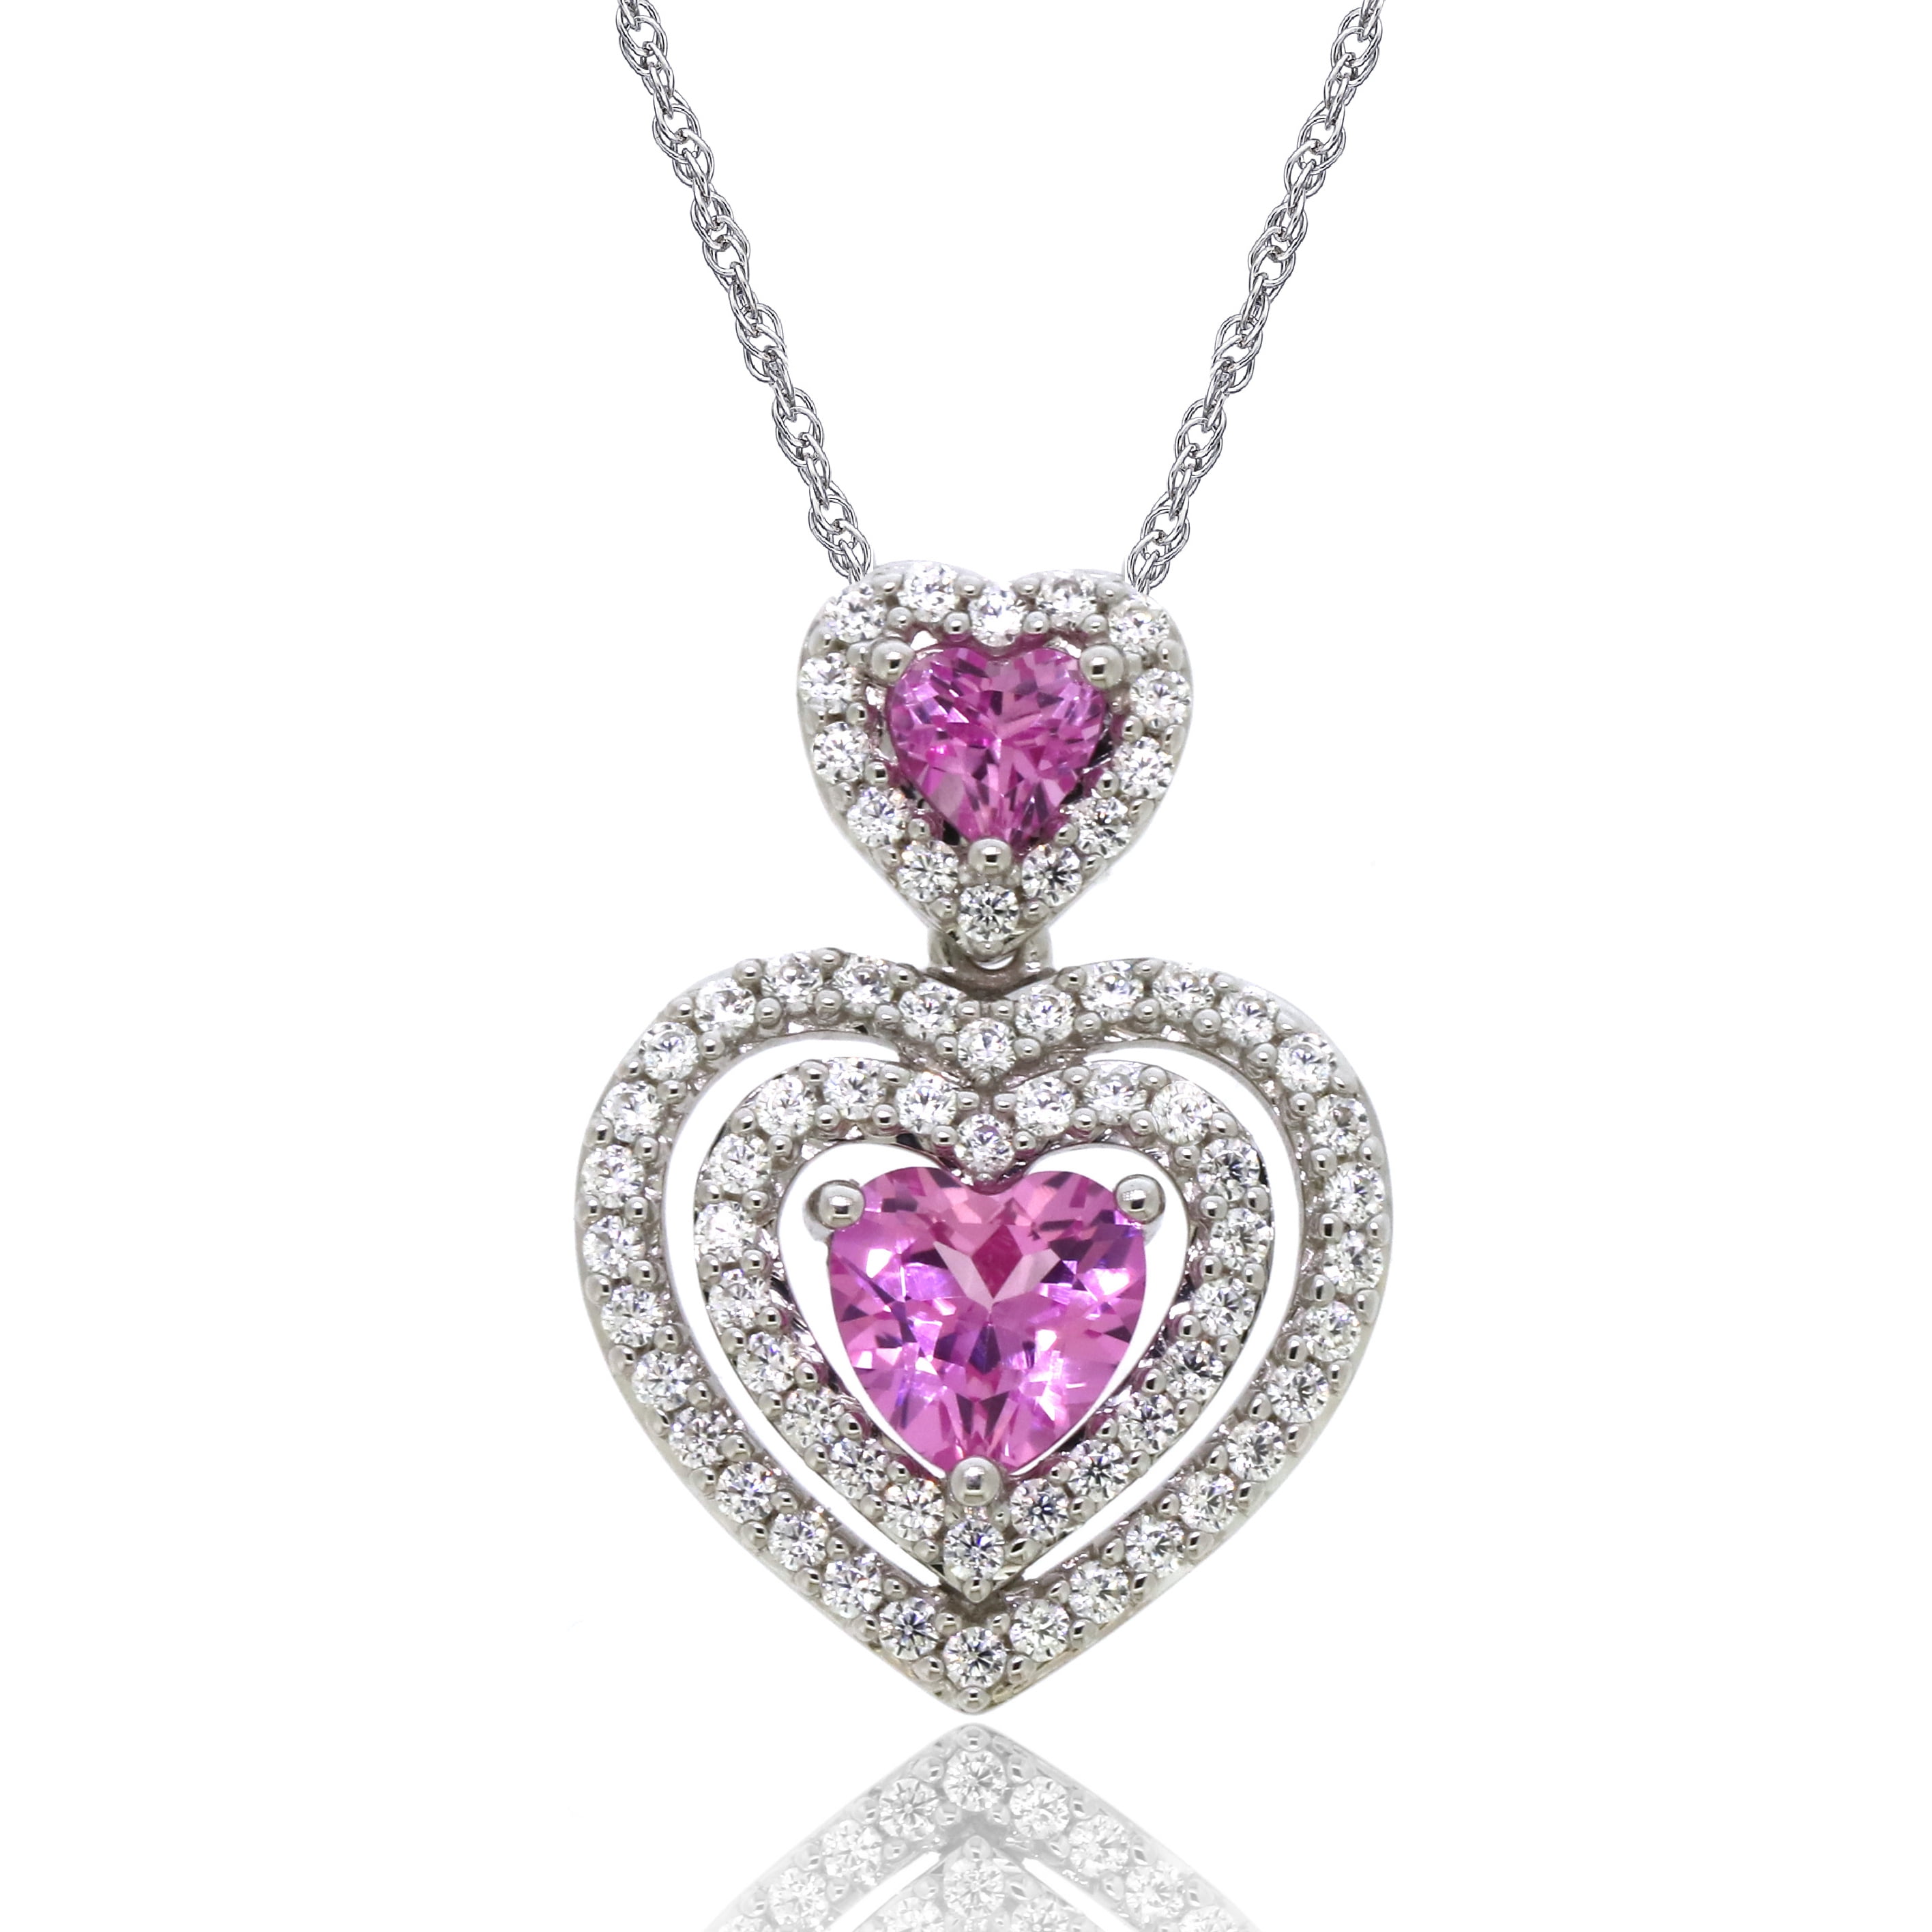 10k Gold Double Pink Sapphire Heart Pendant Necklace | eBay